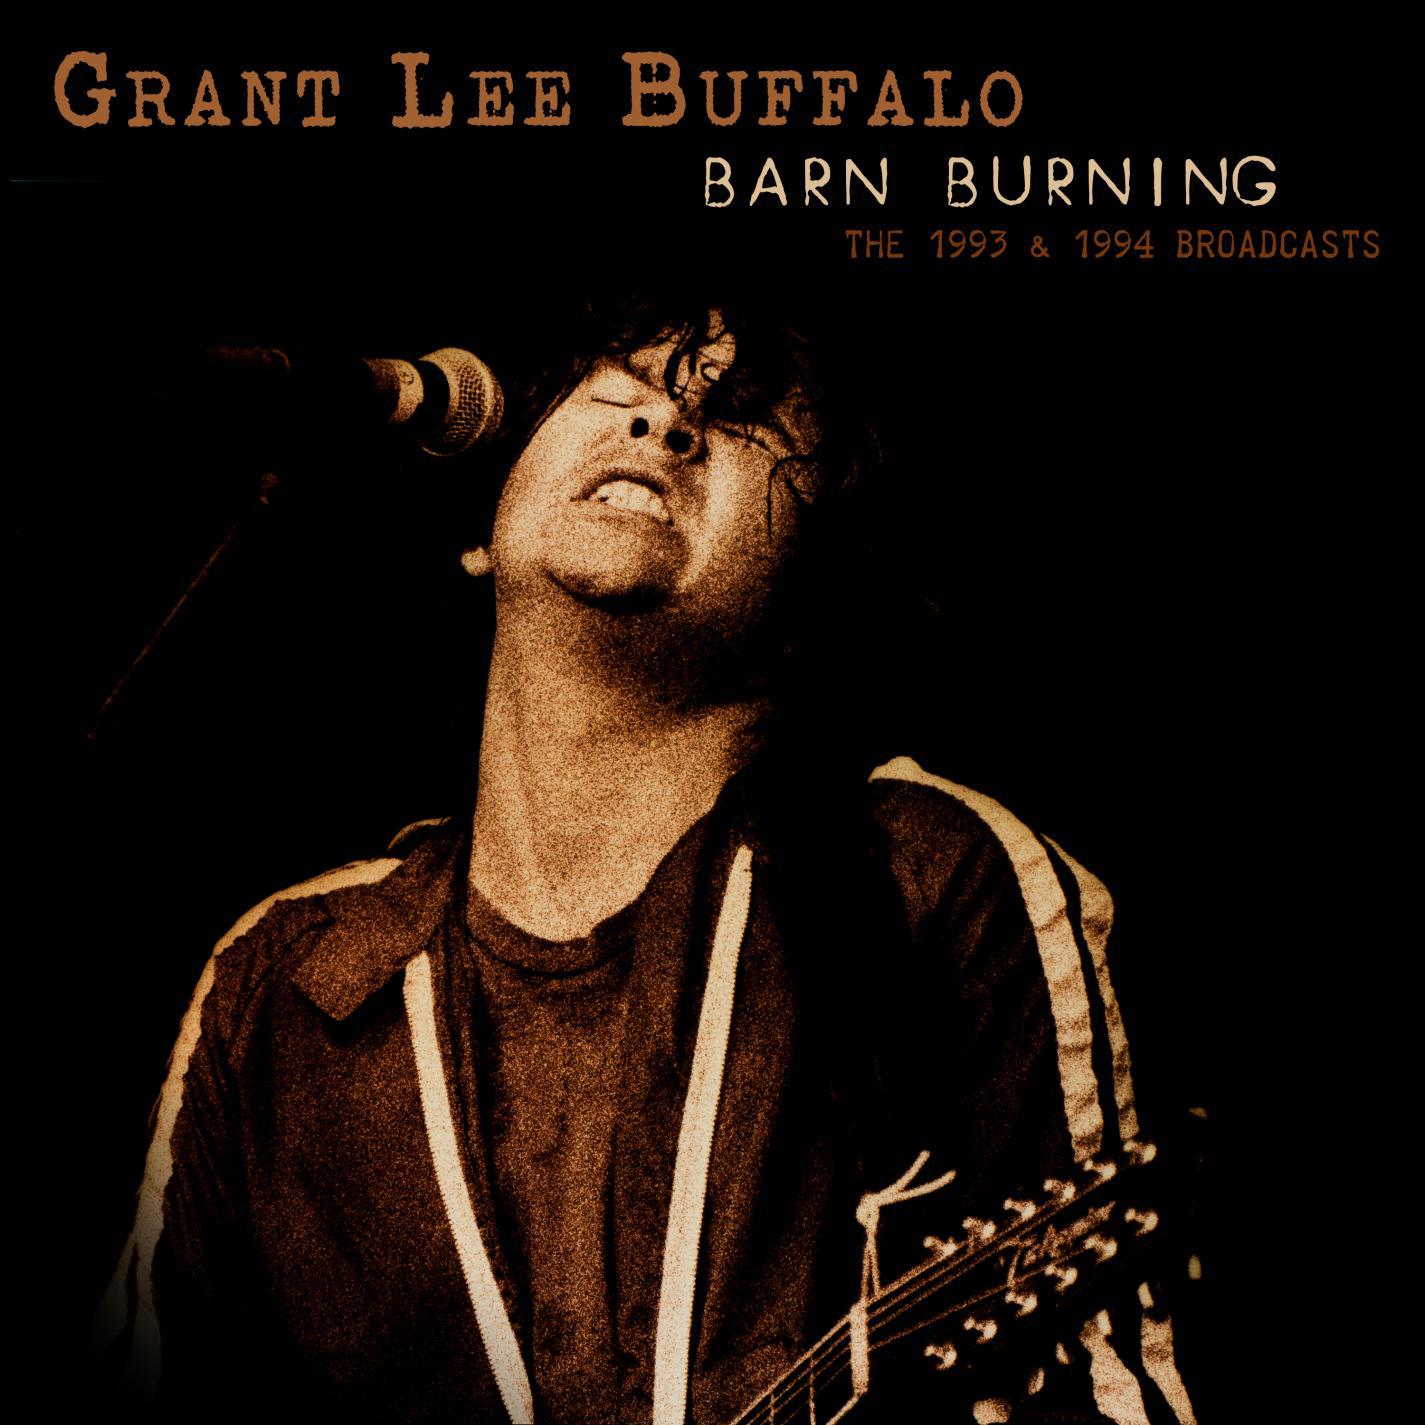 Grant Lee Buffalo - Soft Wolf Tread (Live at Glastonbury 1993)